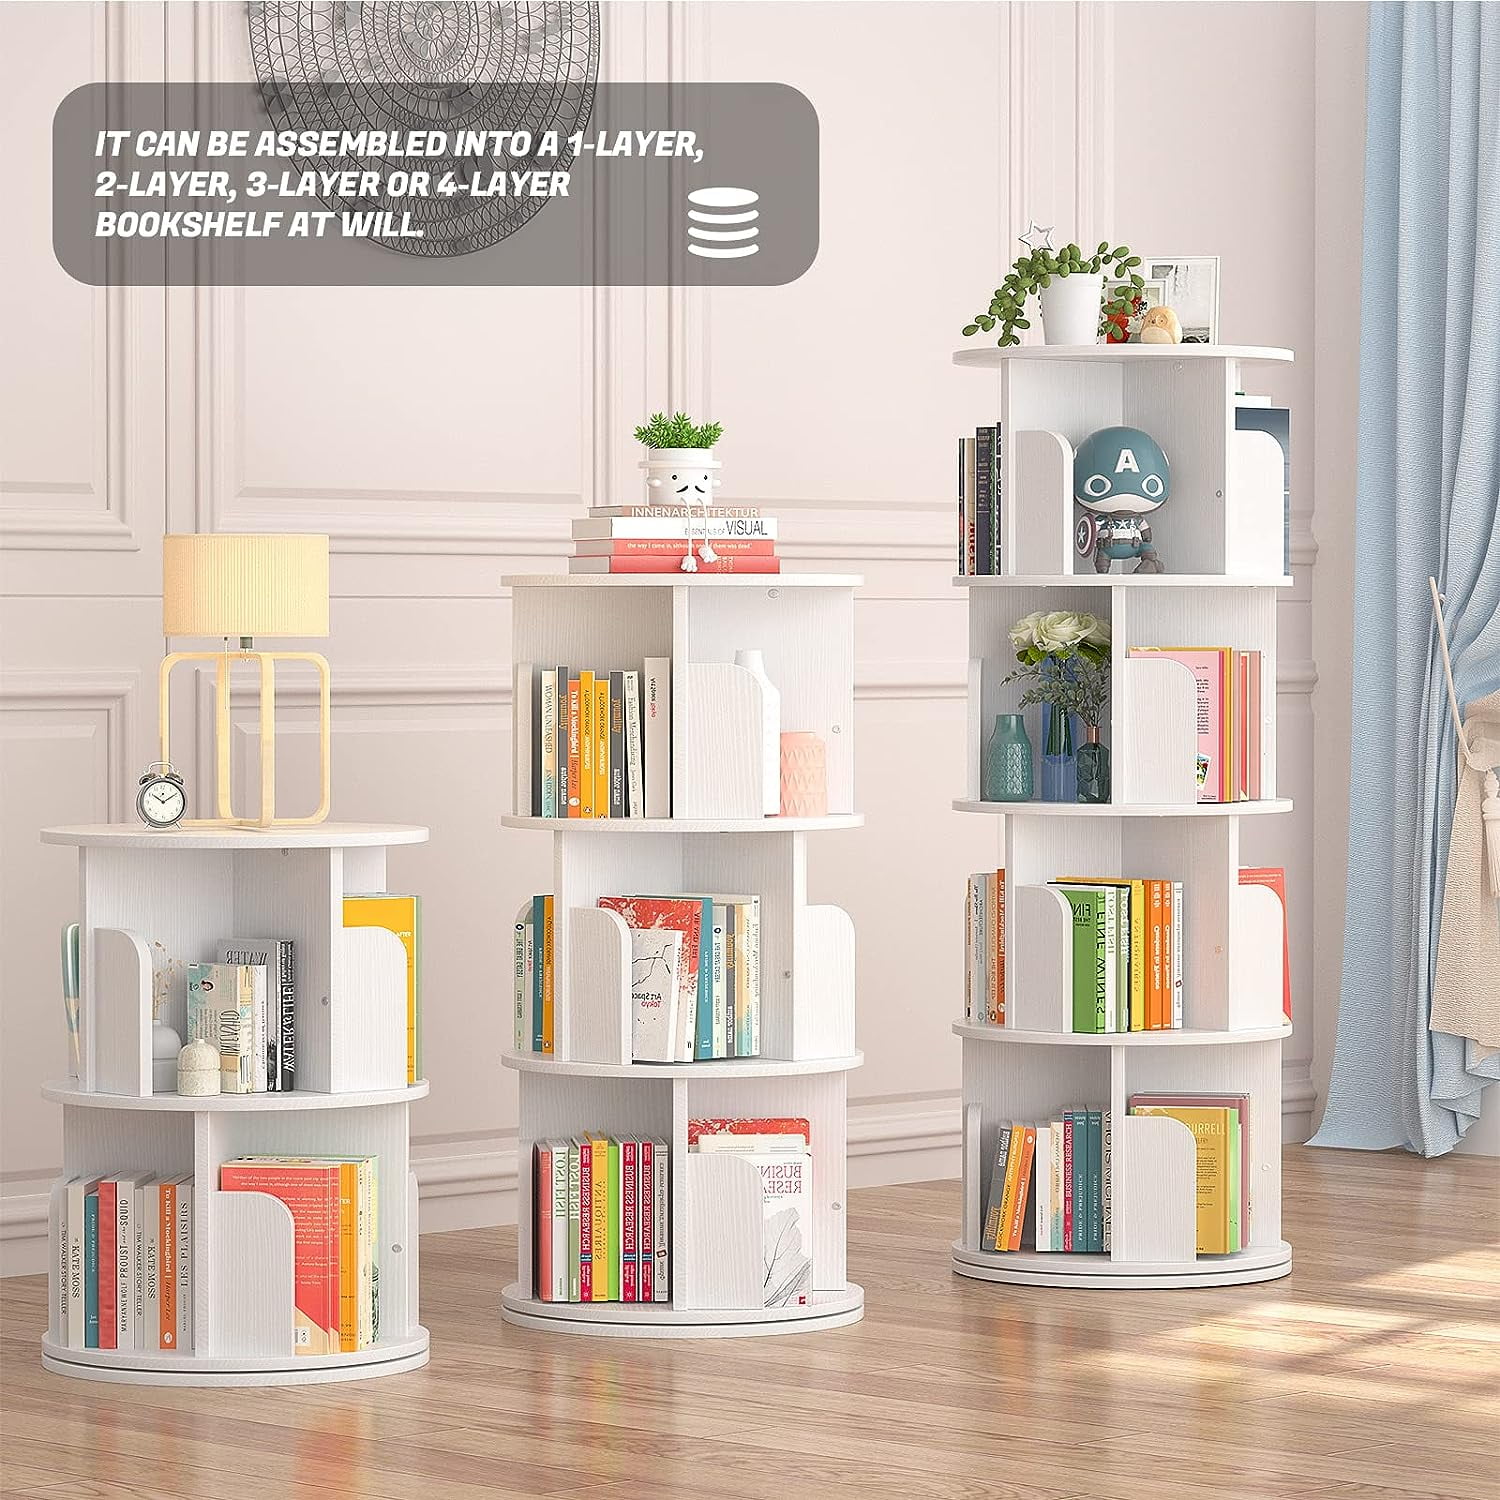  HASMI Rotating Bookshelf, 360° Revolving Bookcase Corner,  Stackable Bookshelf Organizer, Display Cabinet, for Office Home Living Room  Study : Home & Kitchen